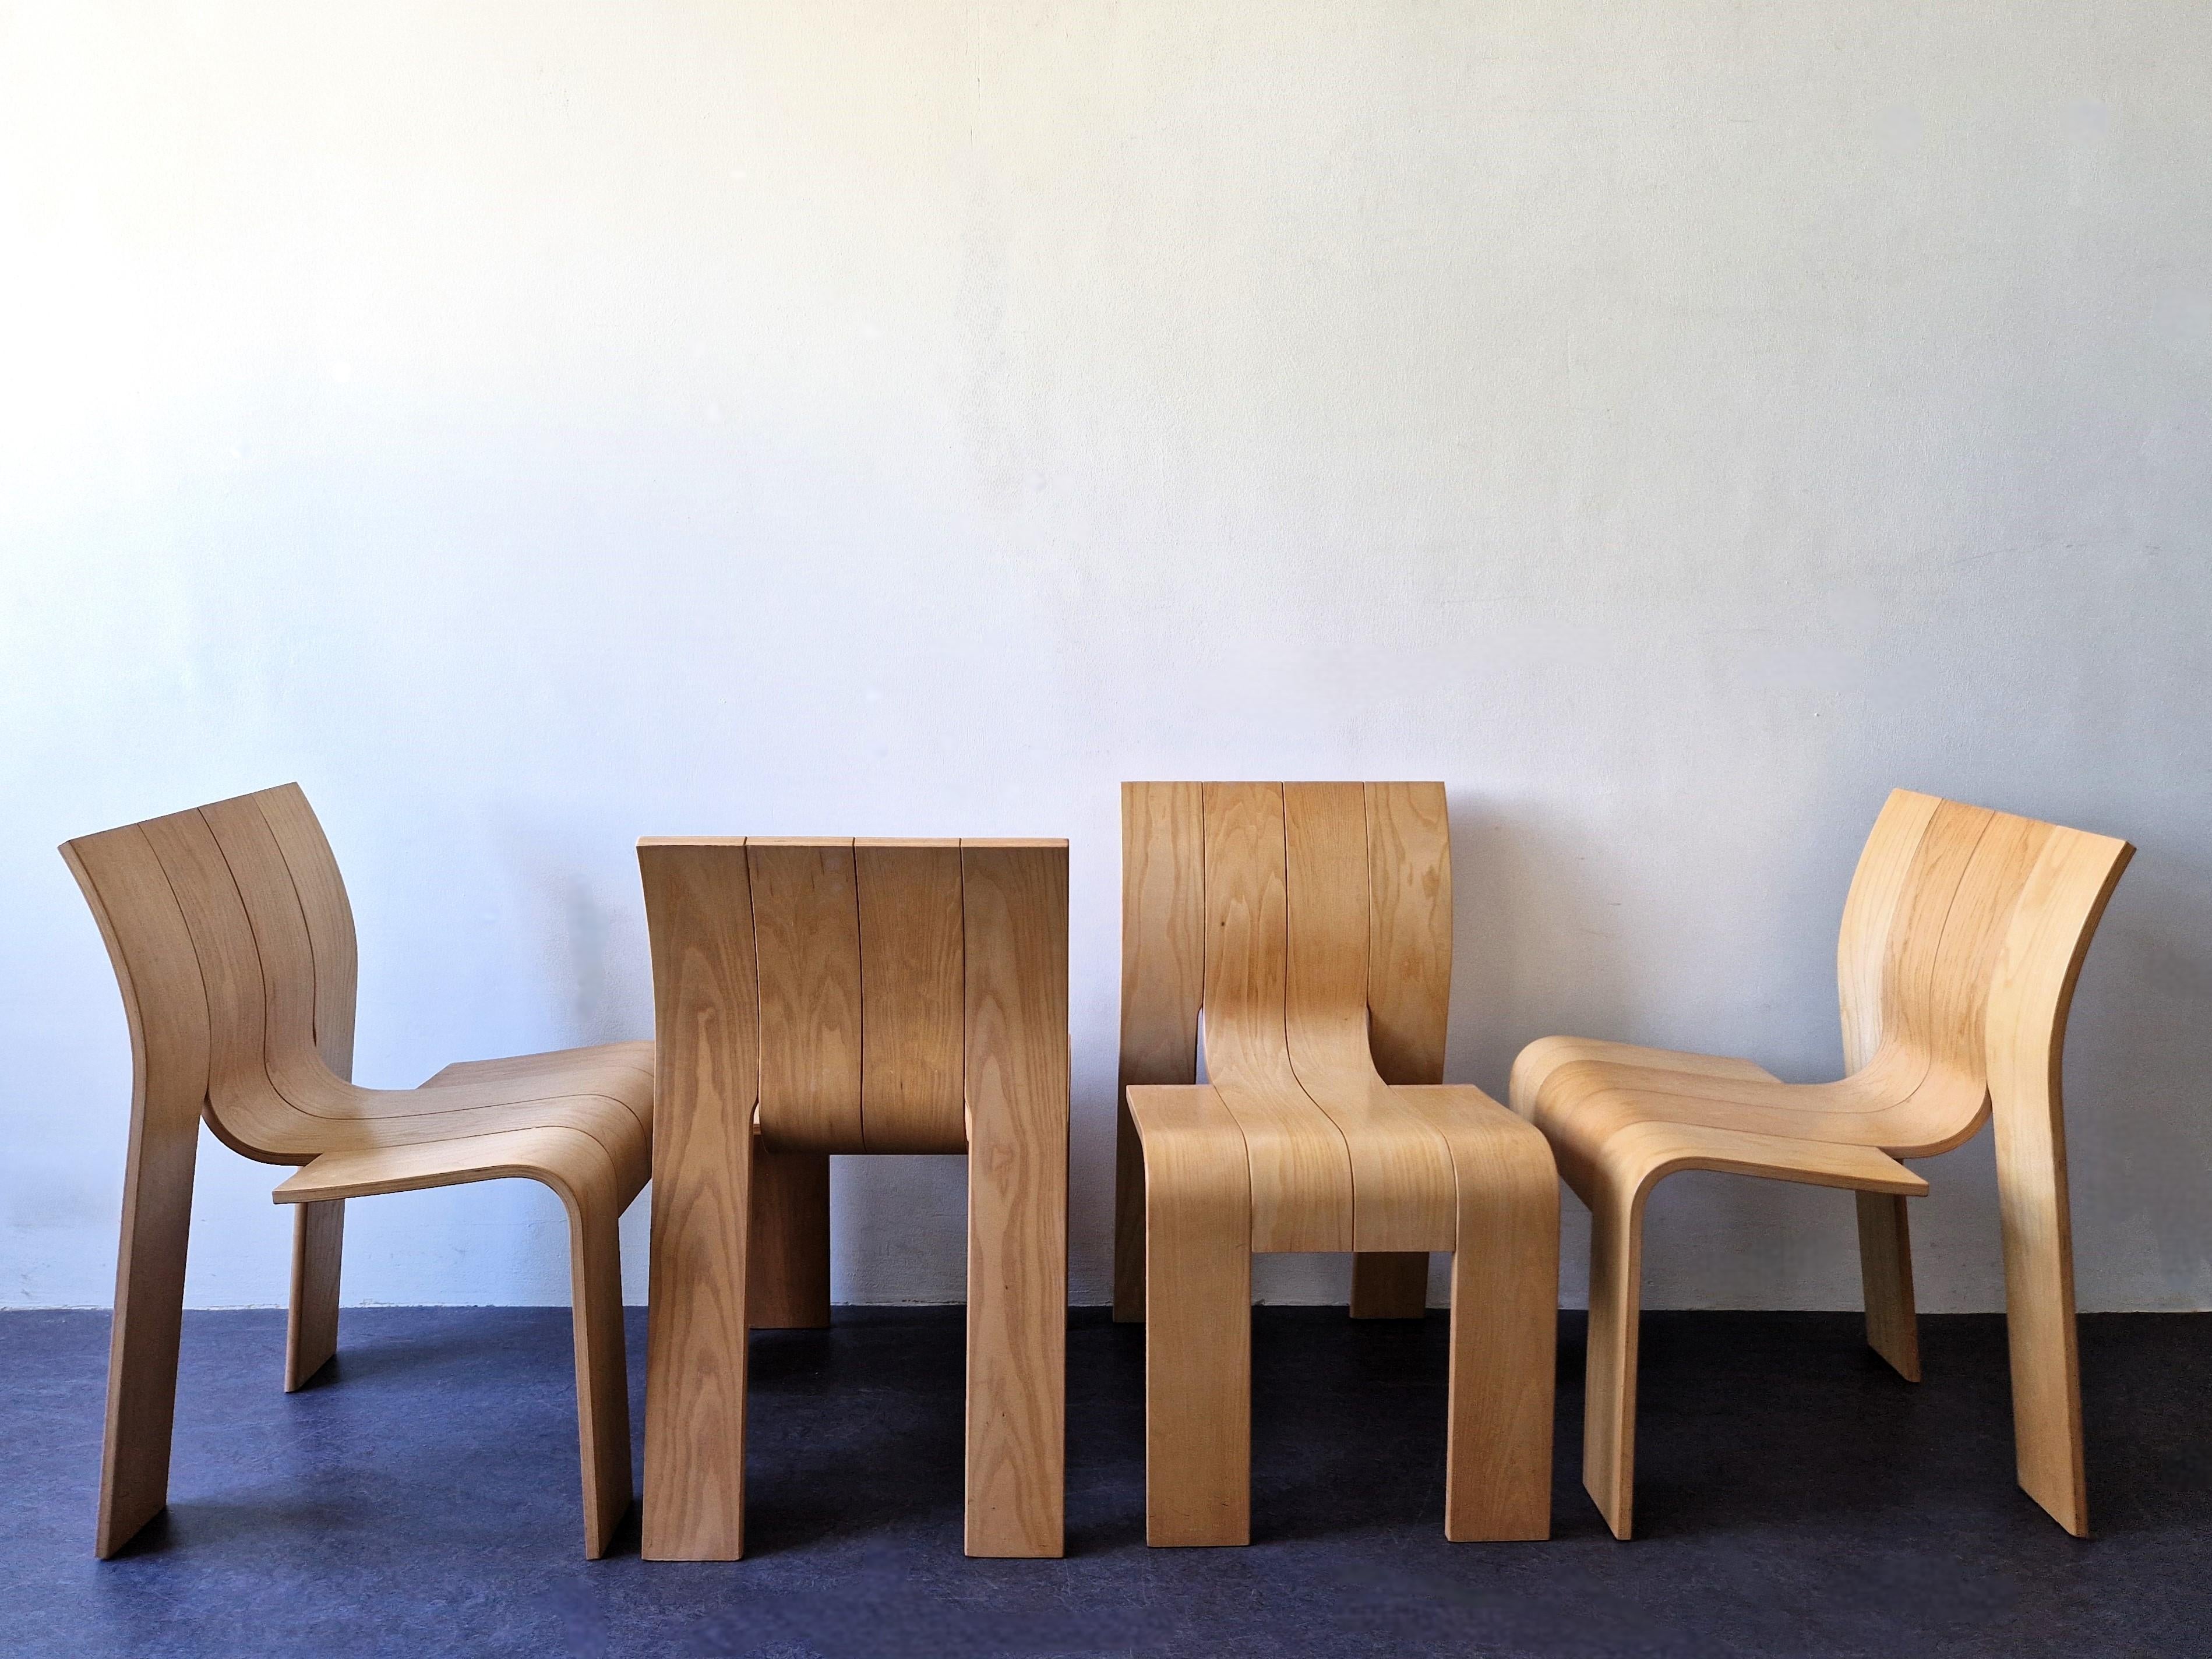 Dutch Set of 4 Strip chairs by Gijs Bakker for Castelijn, The Netherlands 1970's For Sale